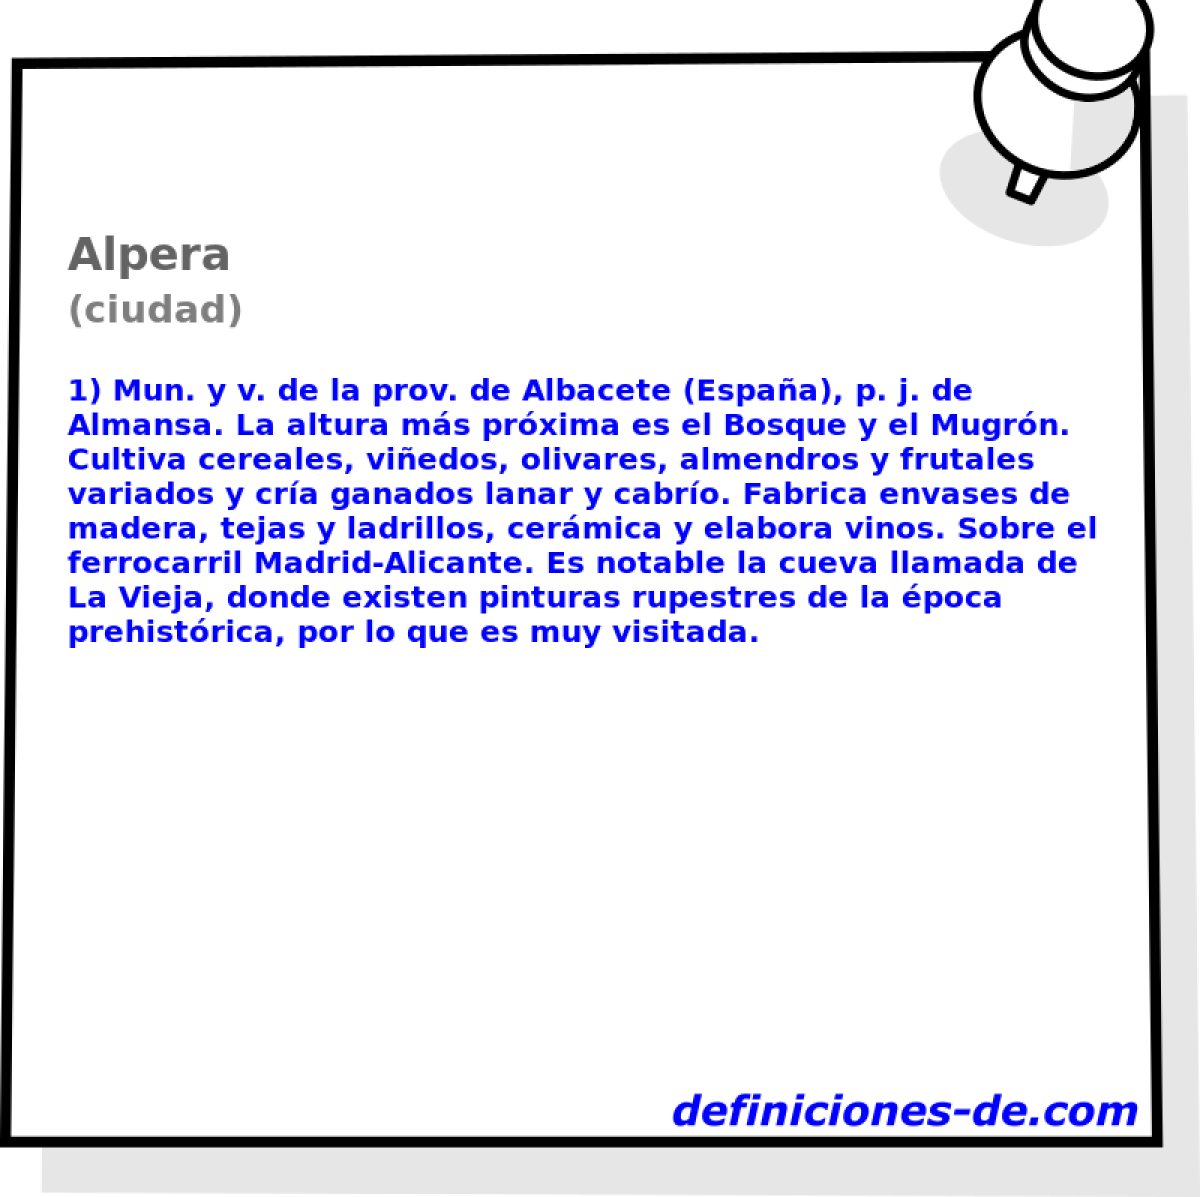 Alpera (ciudad)